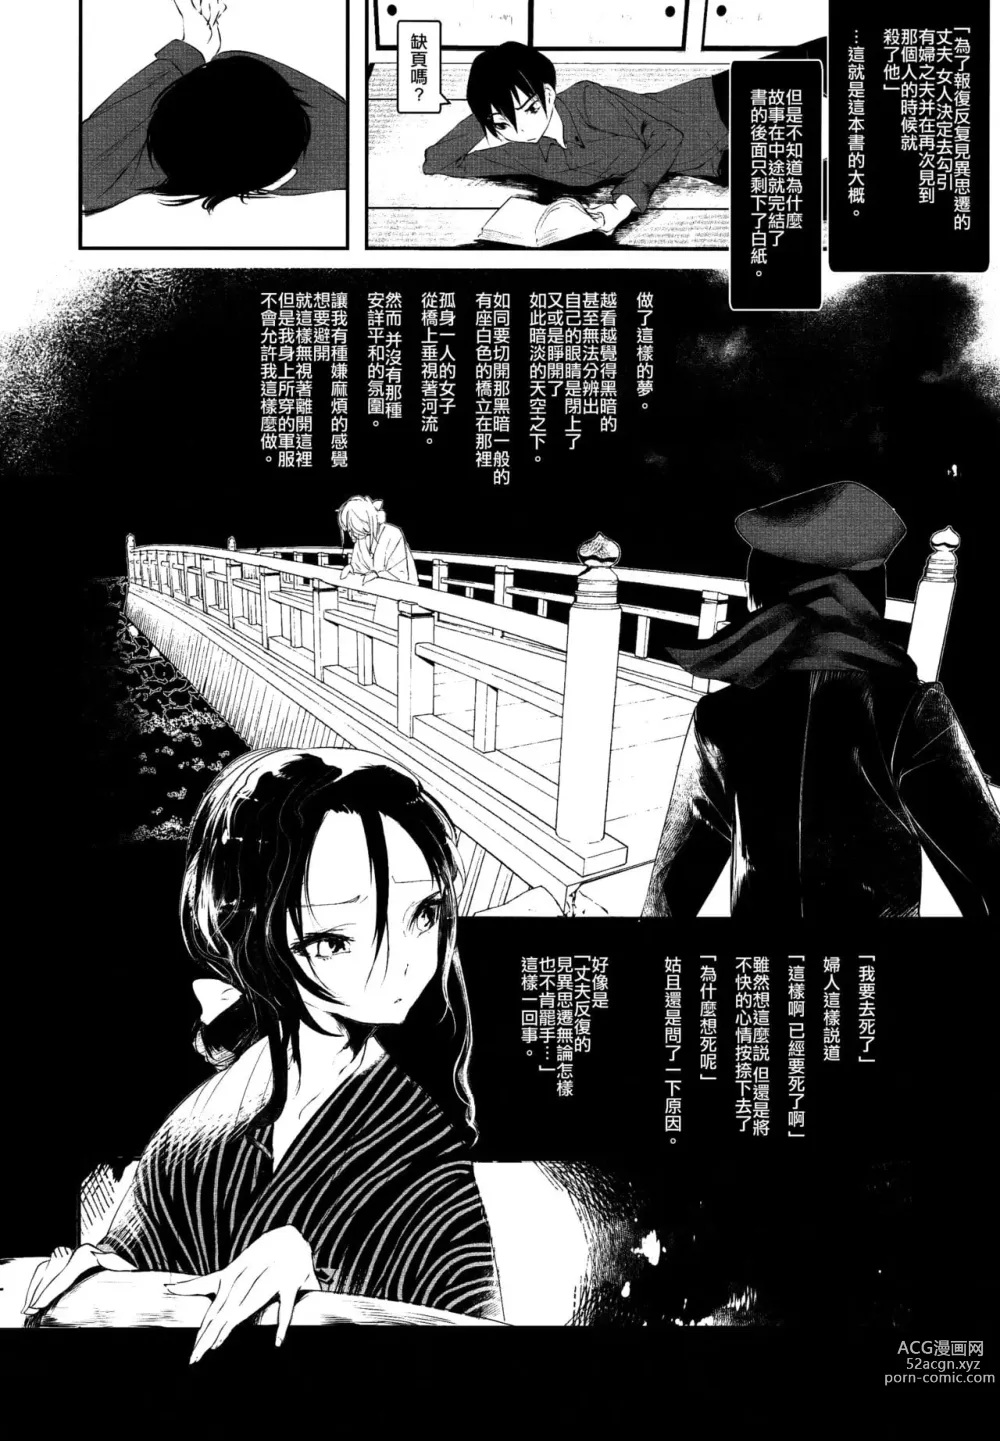 Page 4 of doujinshi 1-gou collection